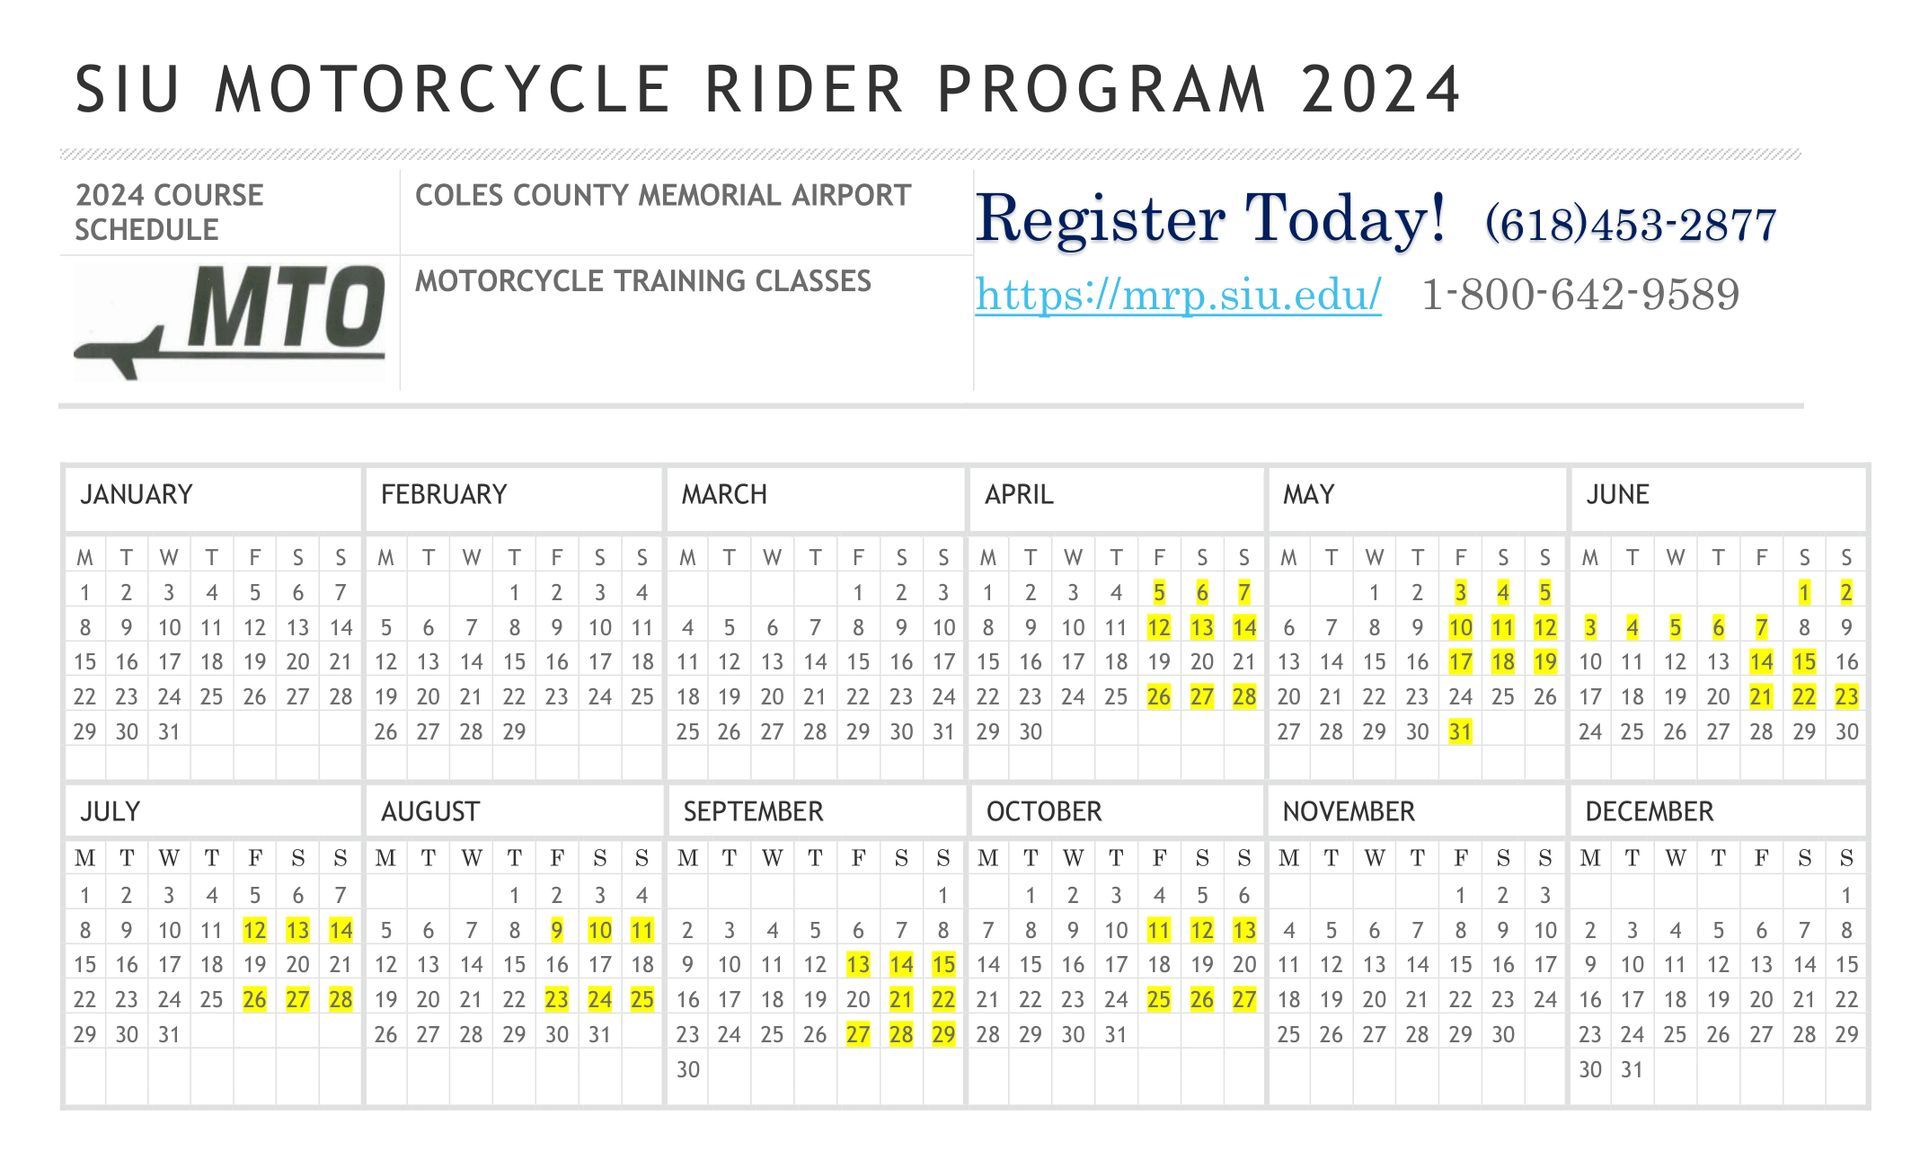 SIU Motorcycle Rider Program Calendar 2024